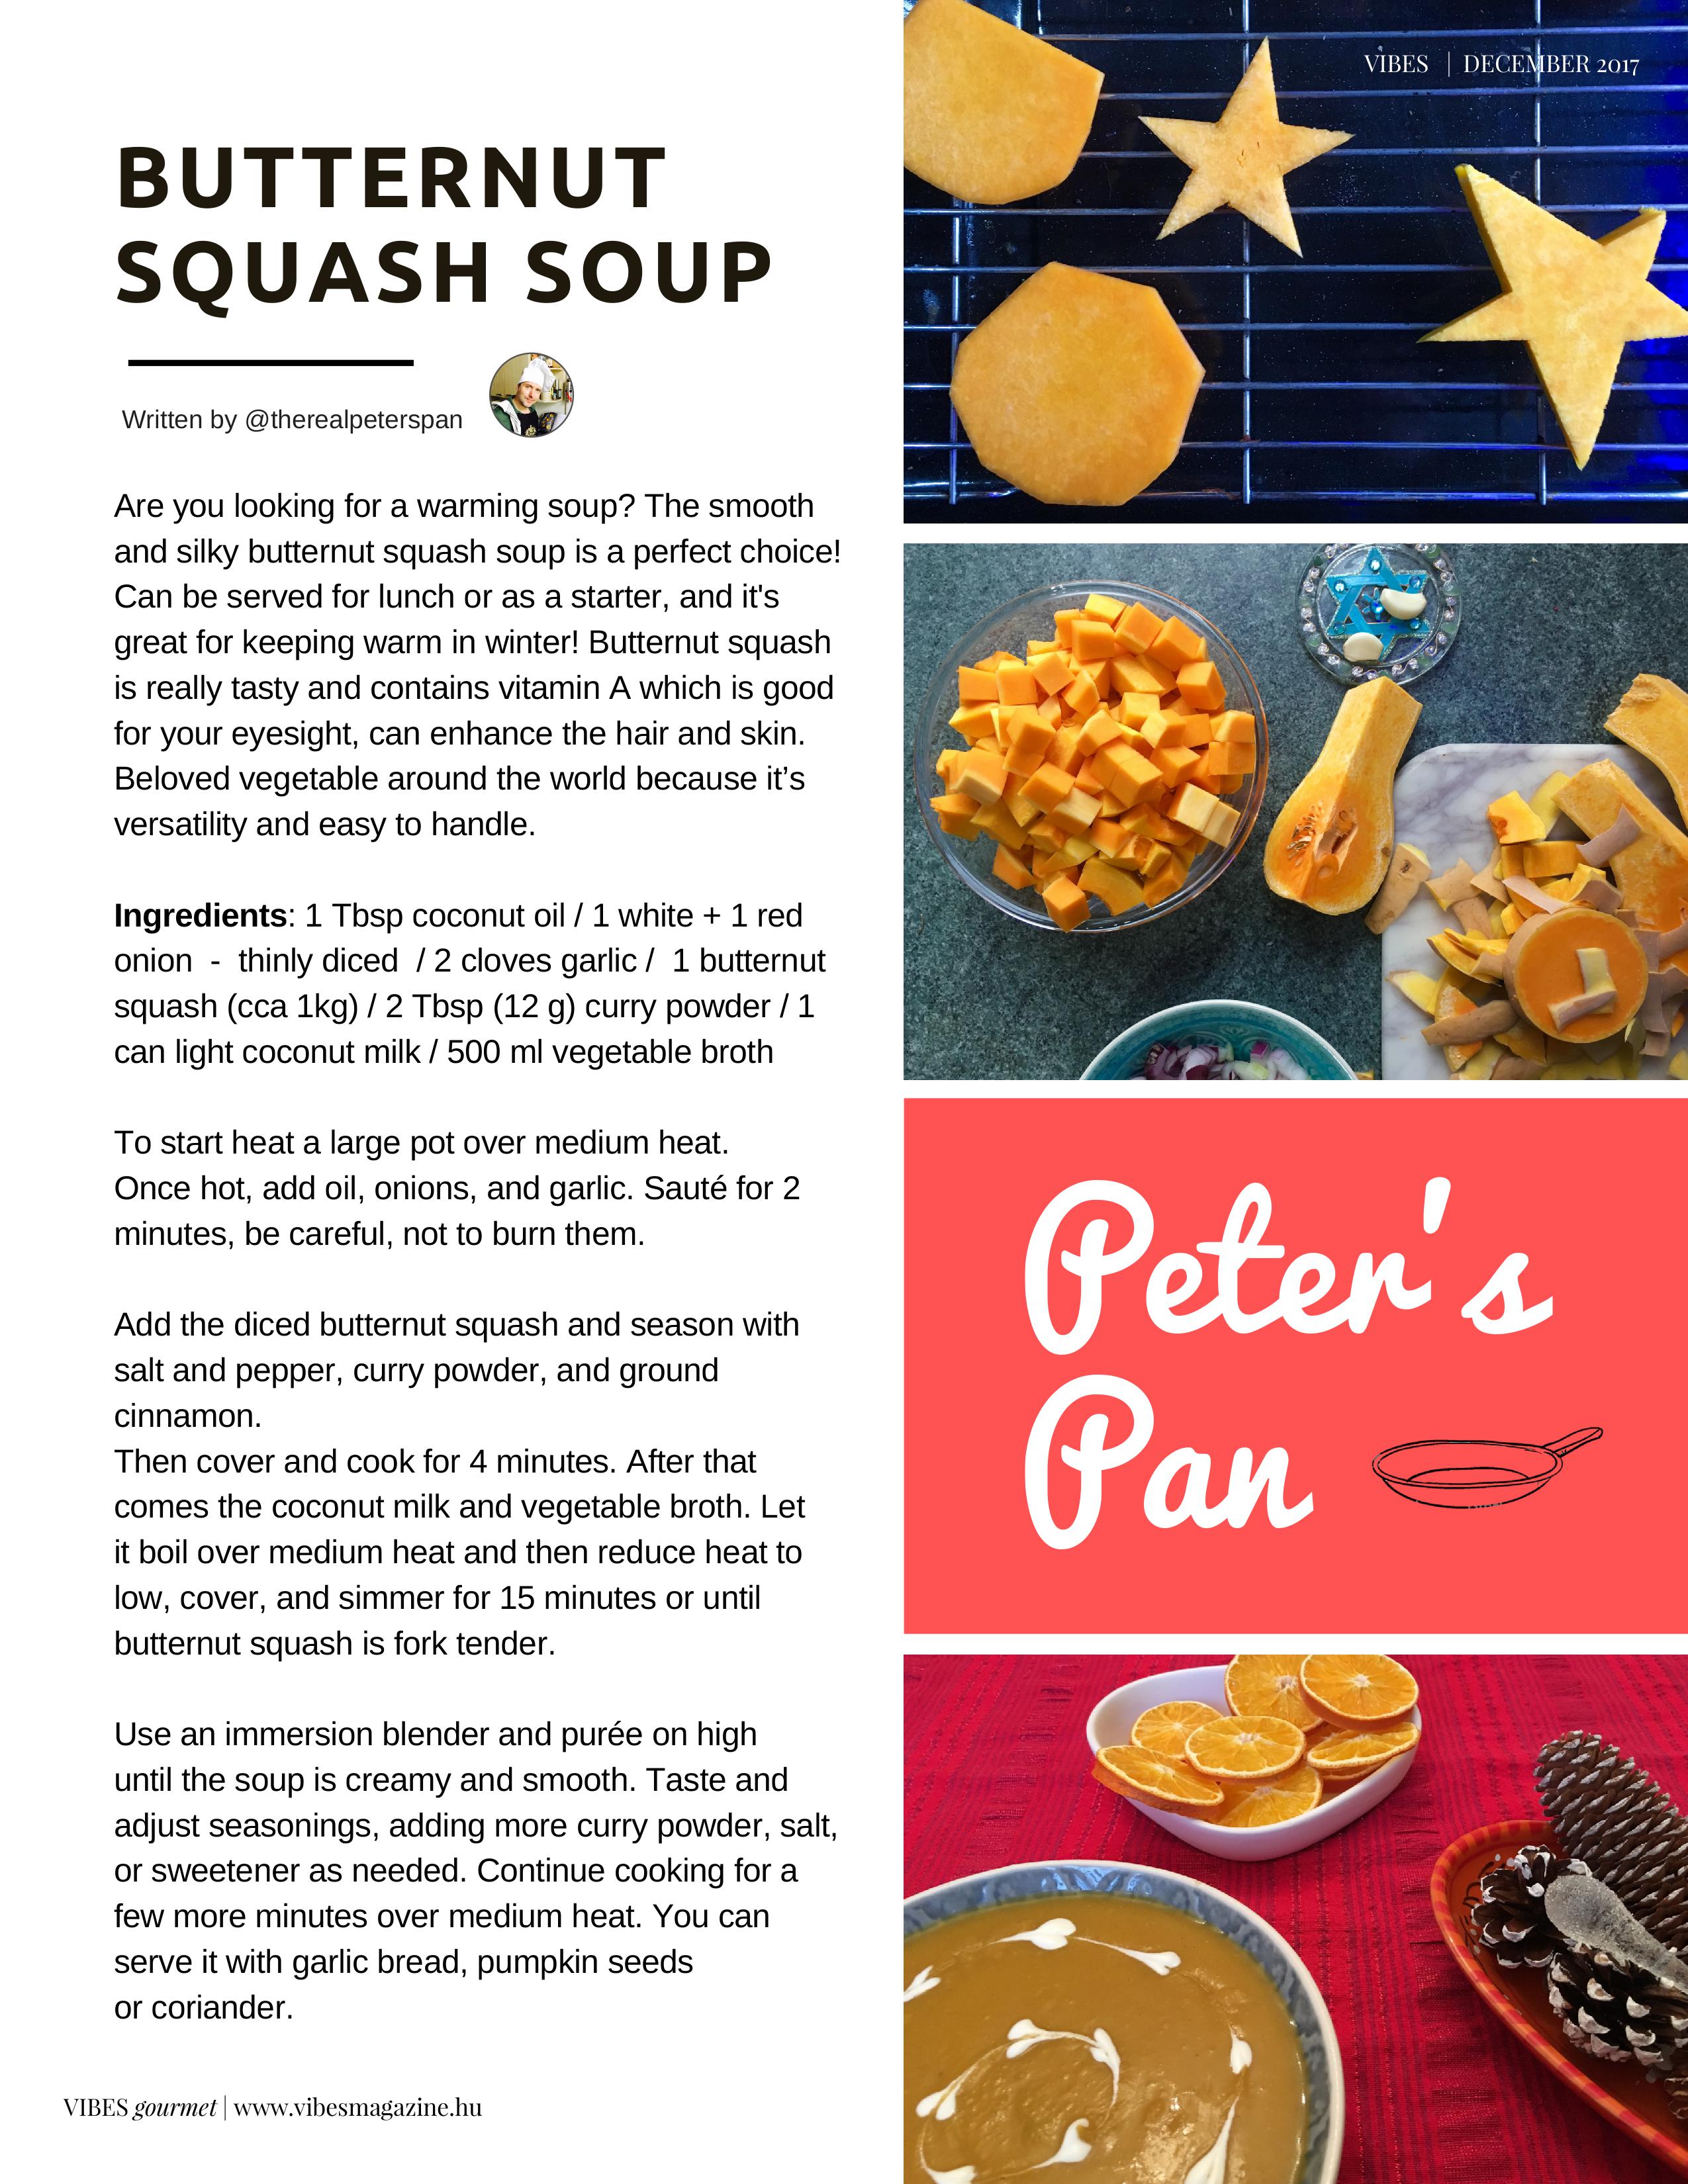 Peter’s Pan: Butternut Squash Soup 